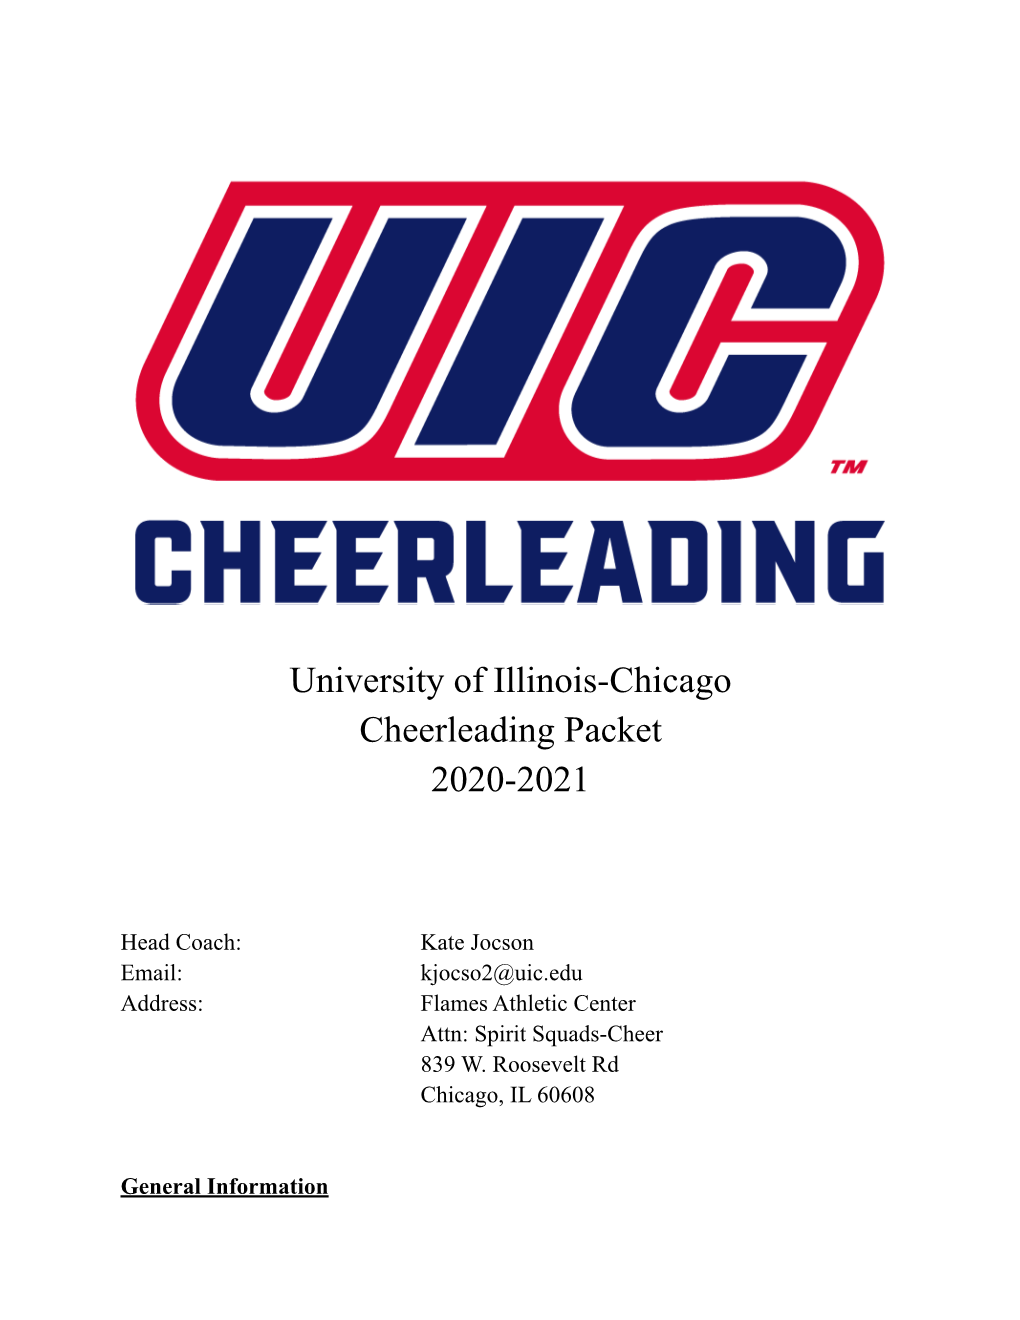 University of Illinois-Chicago Cheerleading Packet 2020-2021